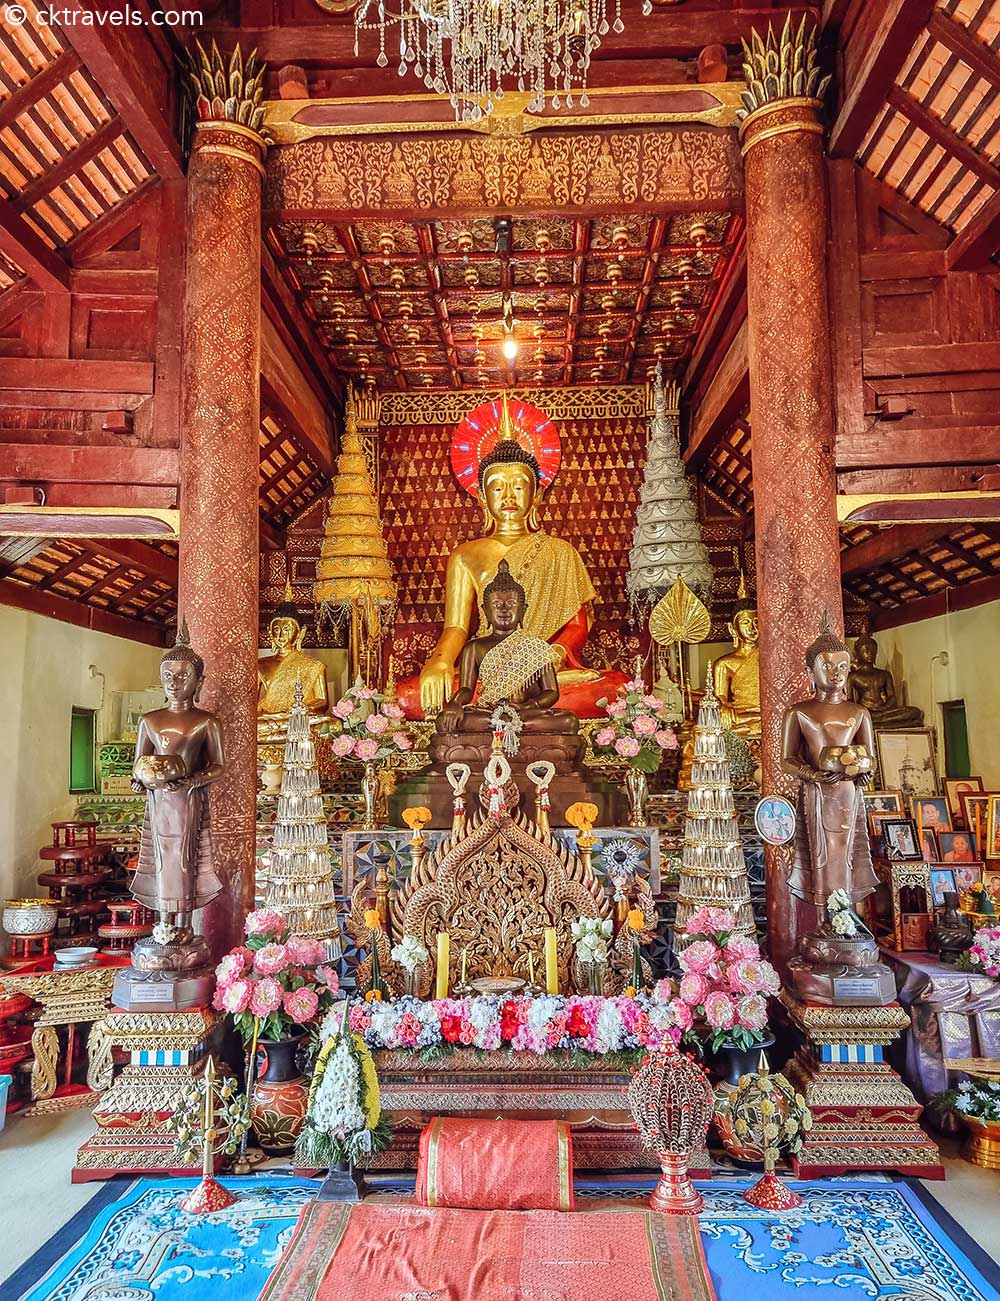 Wat Ket Karam temple in Chiang Mai